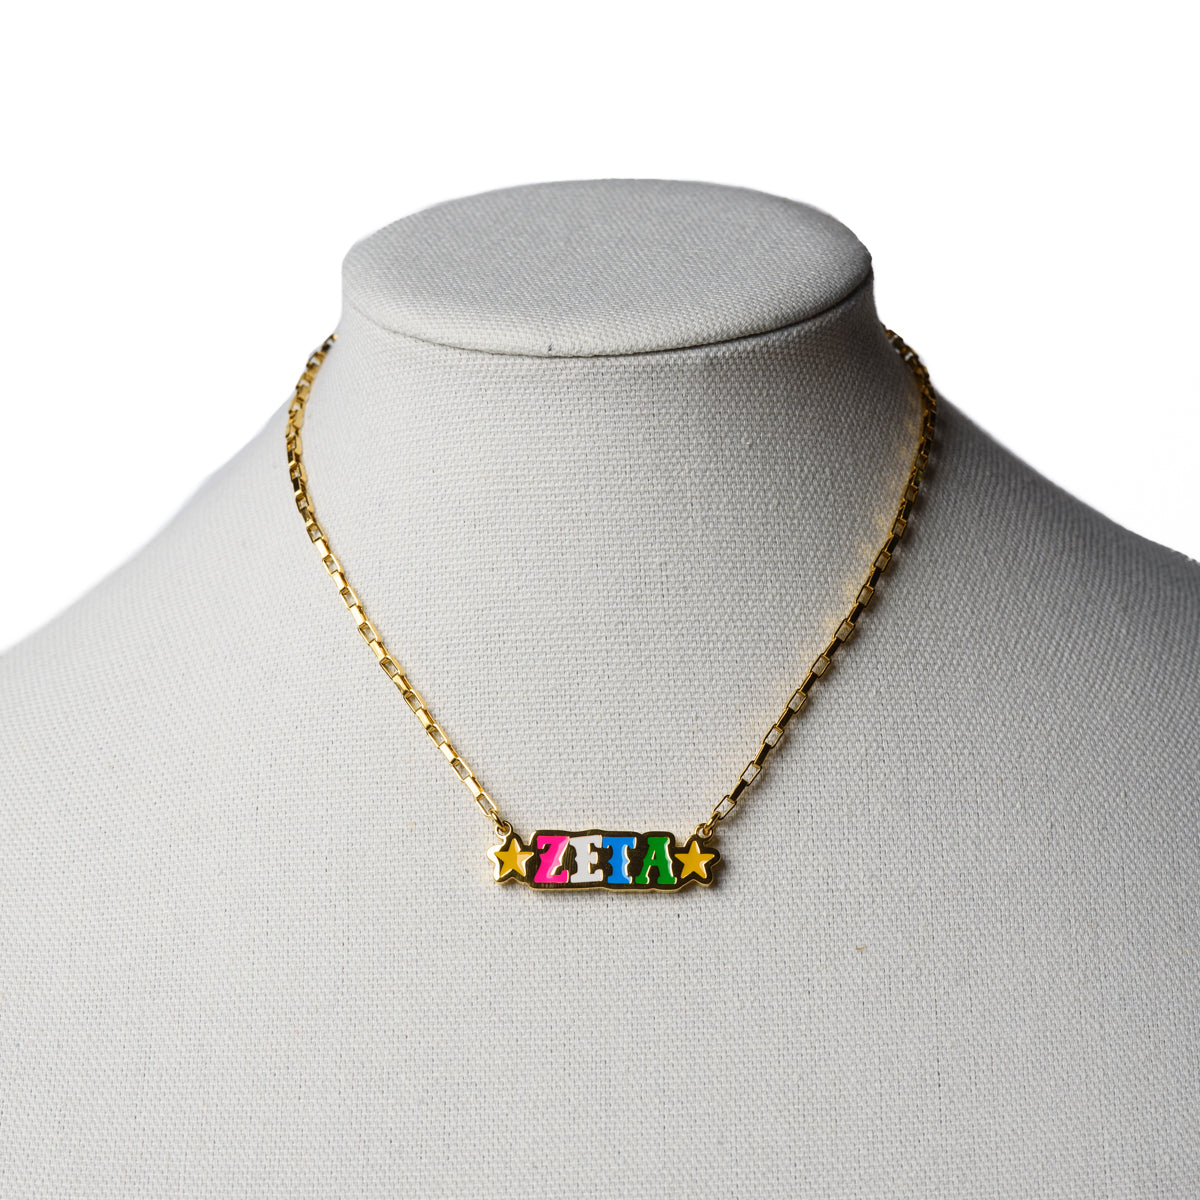 ZETA "Oh My Stars" Gold Box Chain Necklace